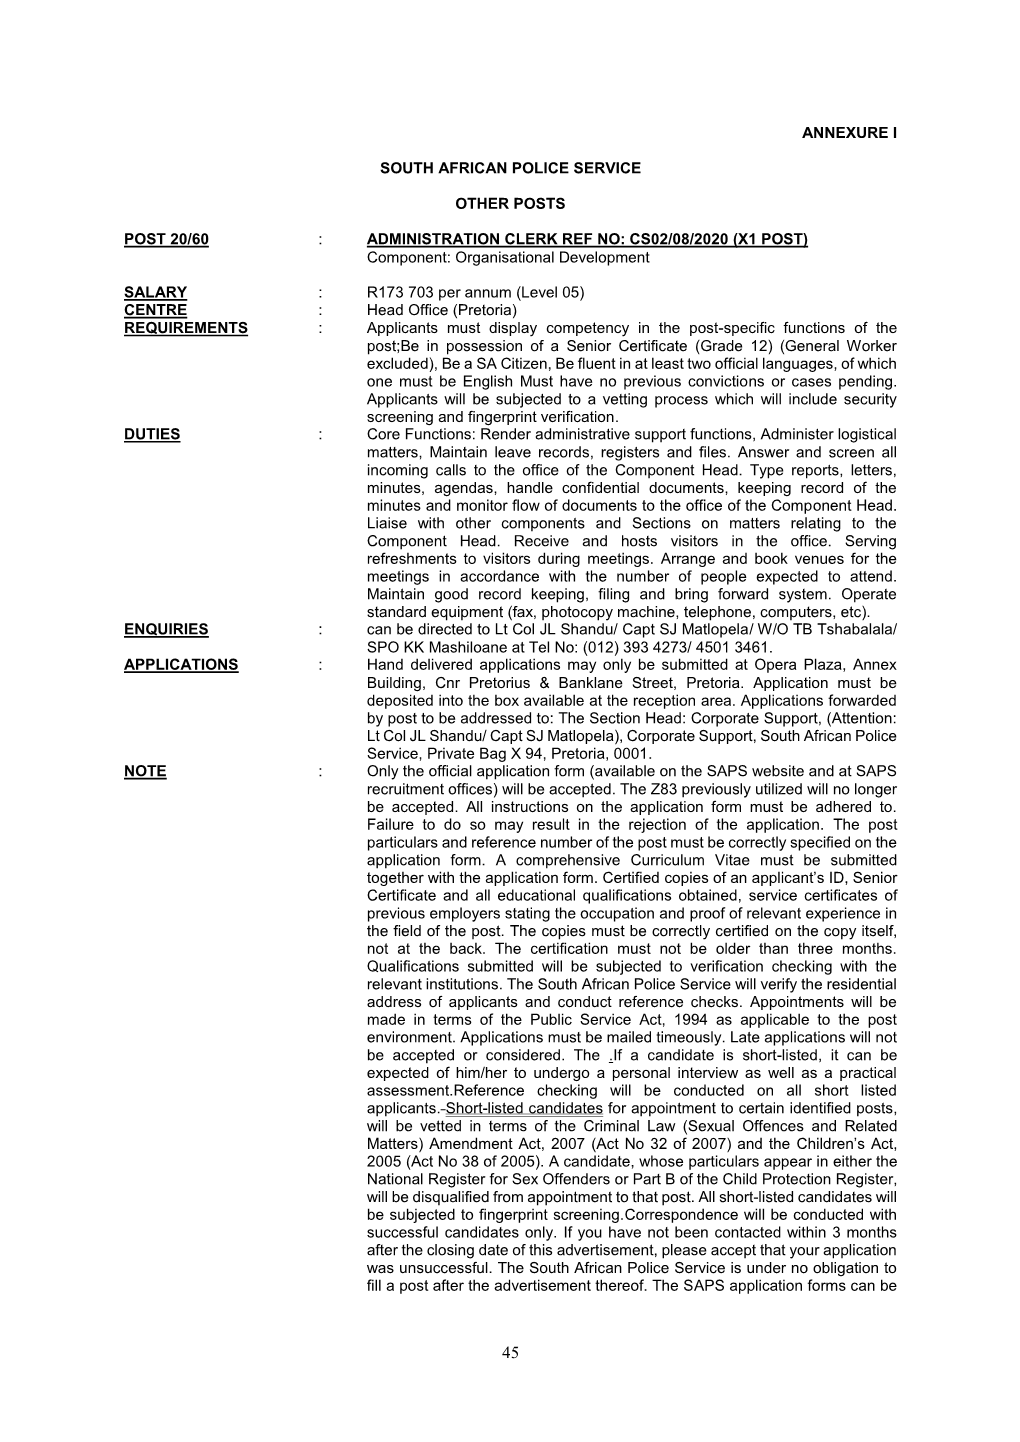 ADMINISTRATION CLERK REF NO: CS02/08/2020 (X1 POST) Component: Organisational Development